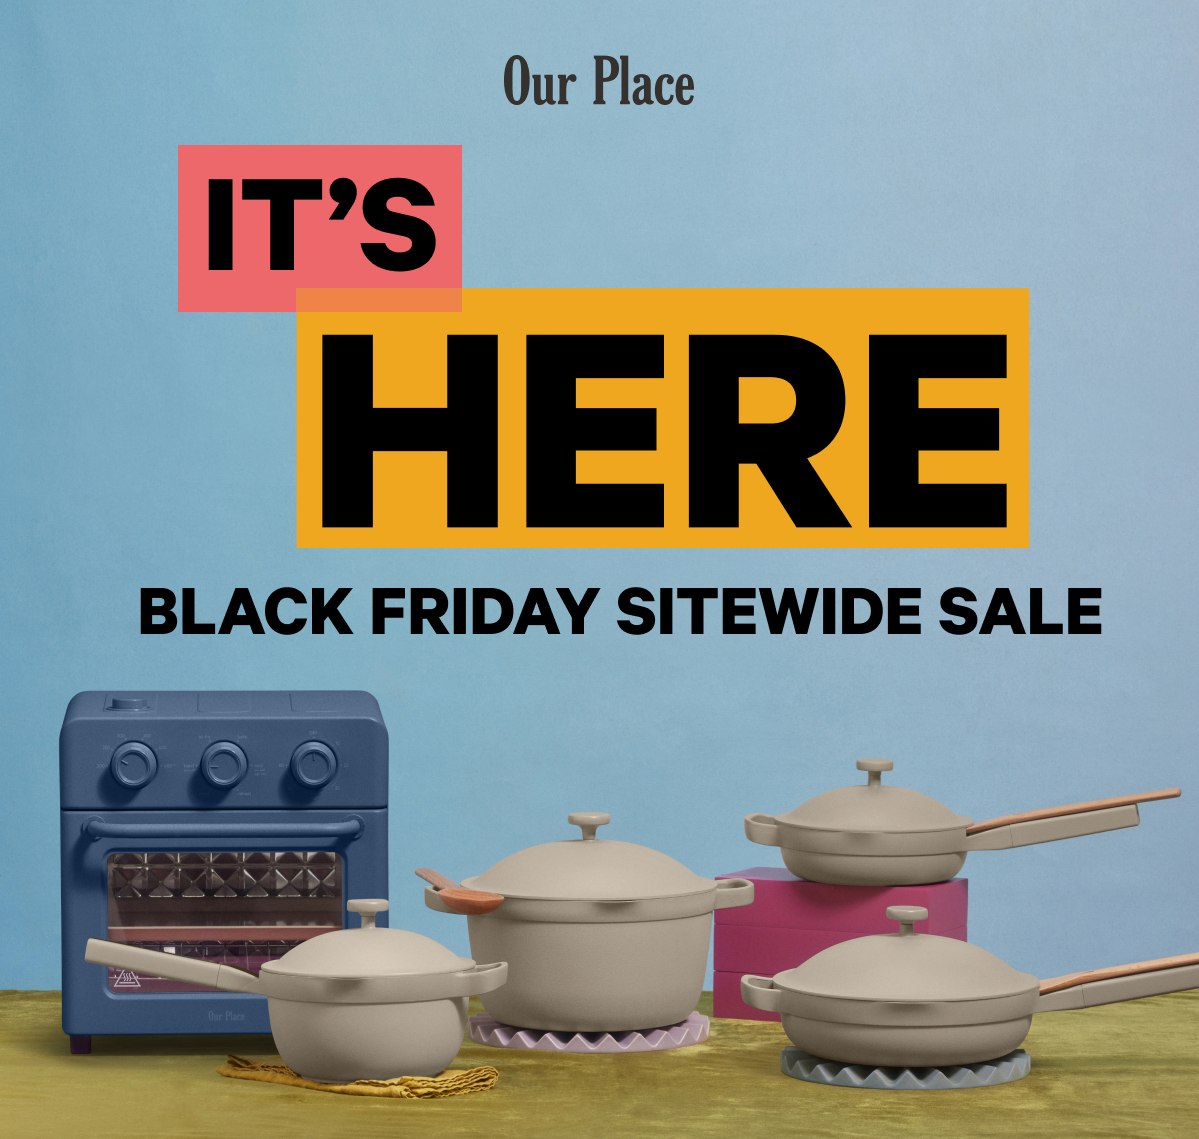 Black Friday Food Network Cookware Deals! Shop here!